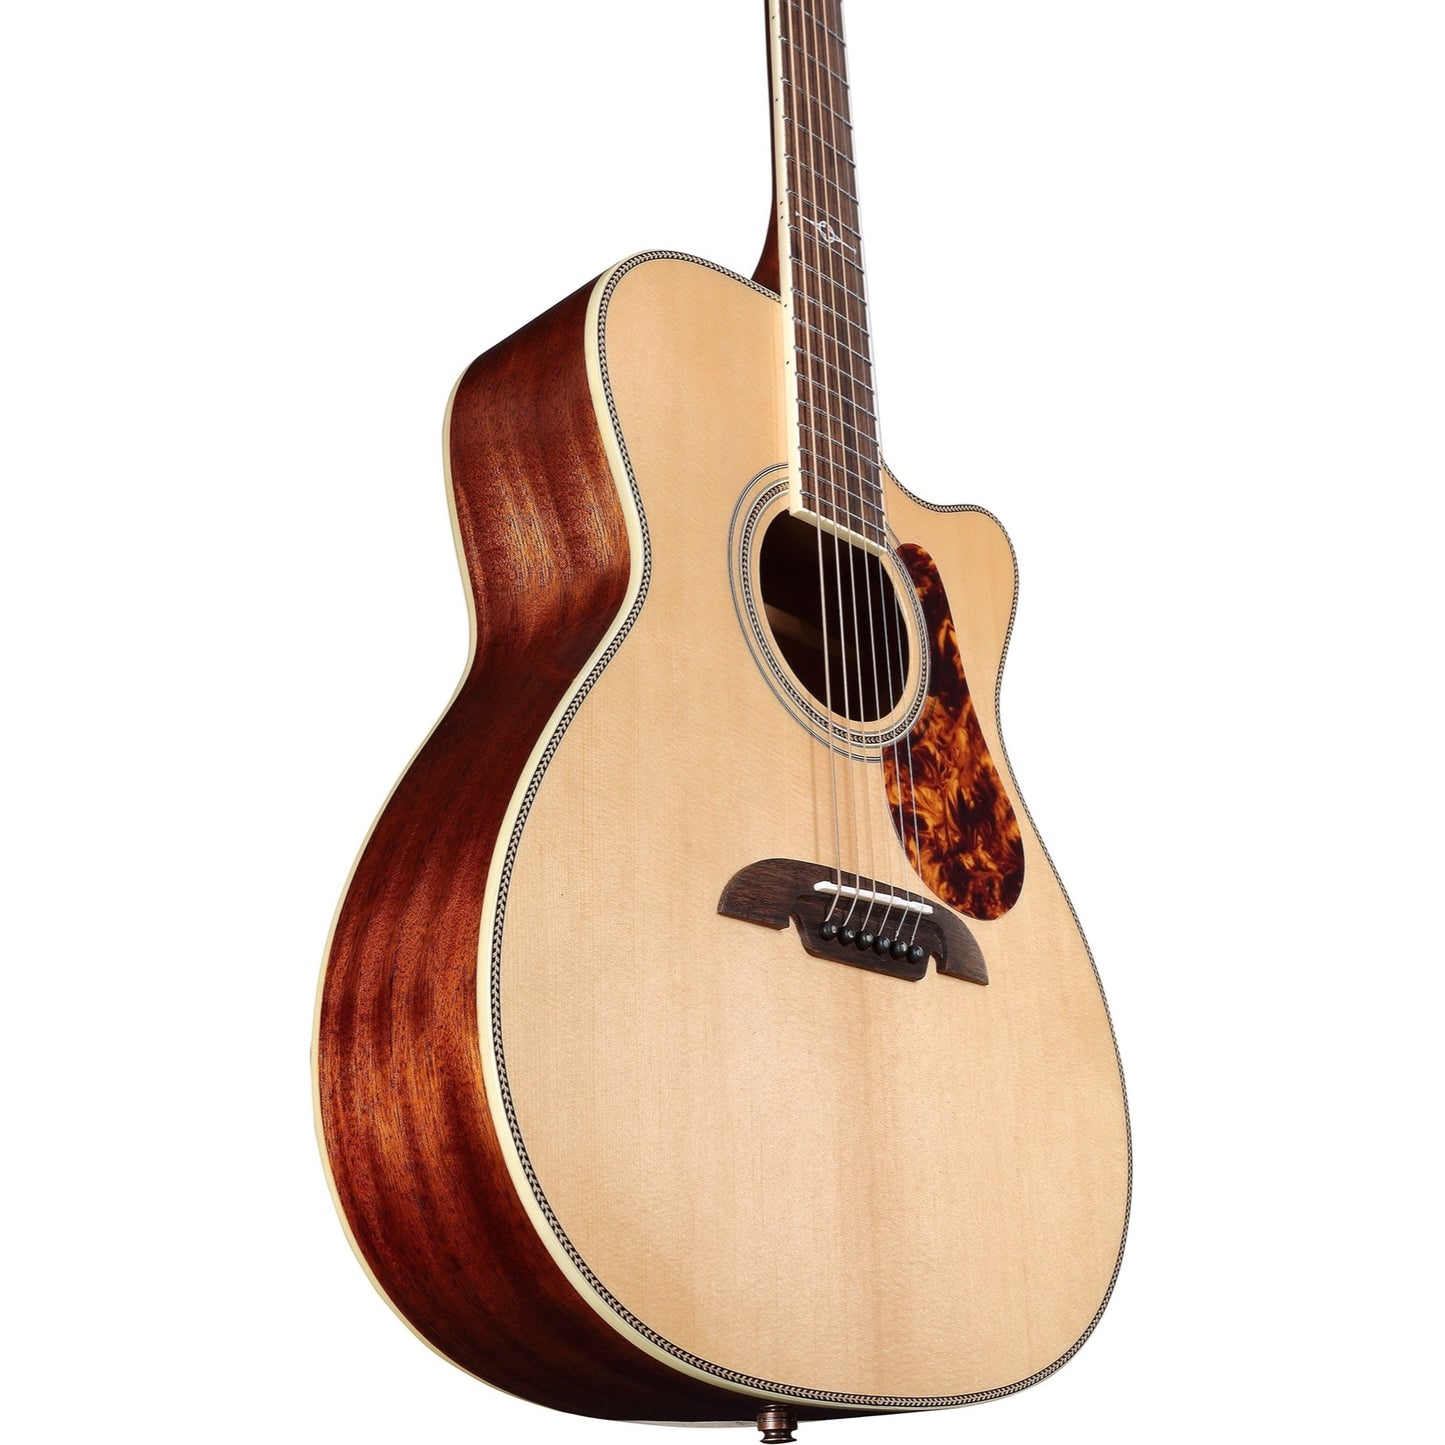 Alvarez Masterworks MF60CEOM Acoustic-Electric Guitar (with Case)